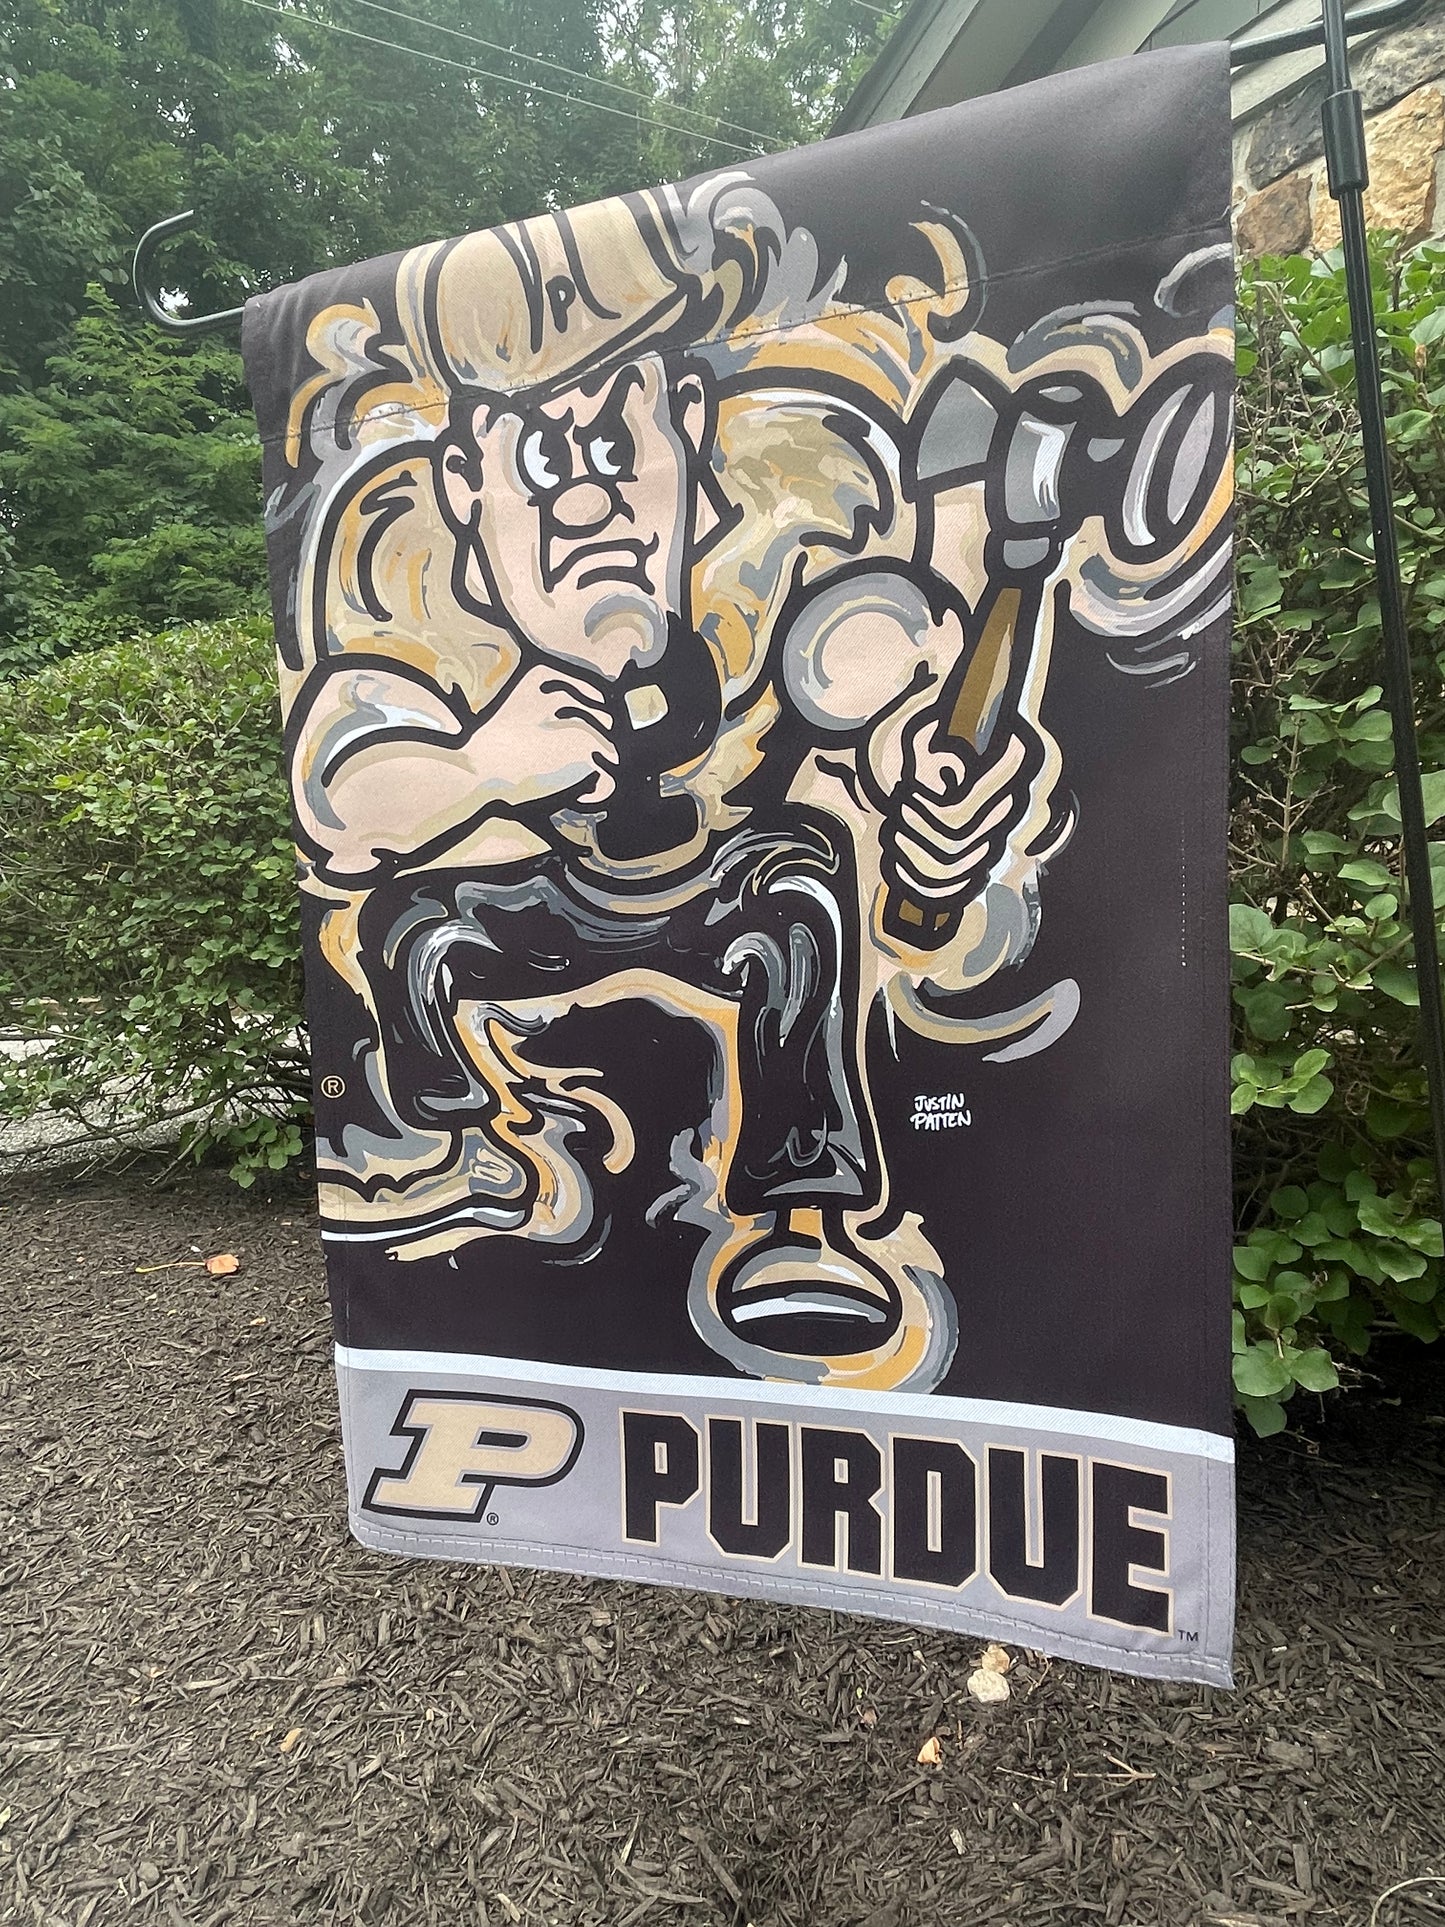 Purdue University Purdue Pete Garden Flag 12" x 18" by Justin Patten